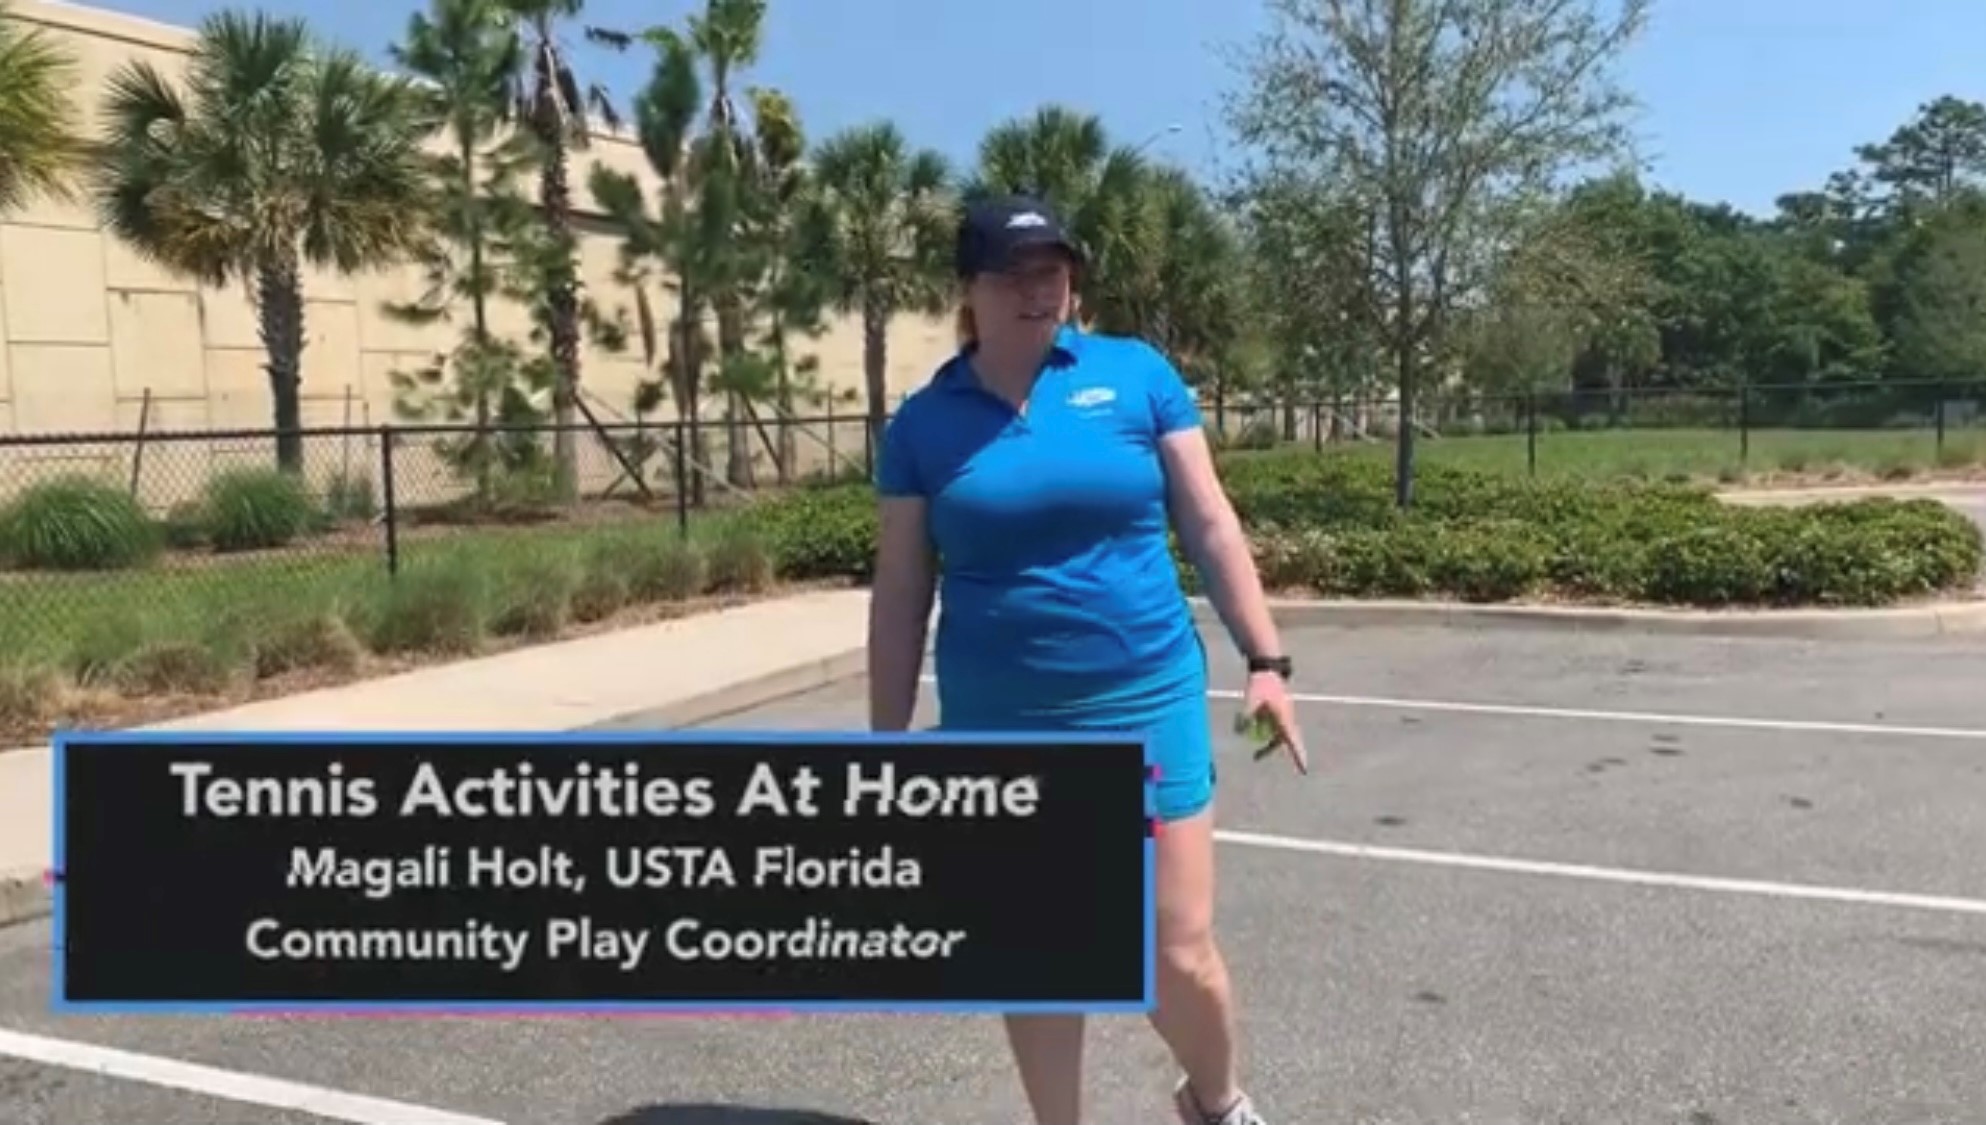 USTA Florida Tennis Instructor